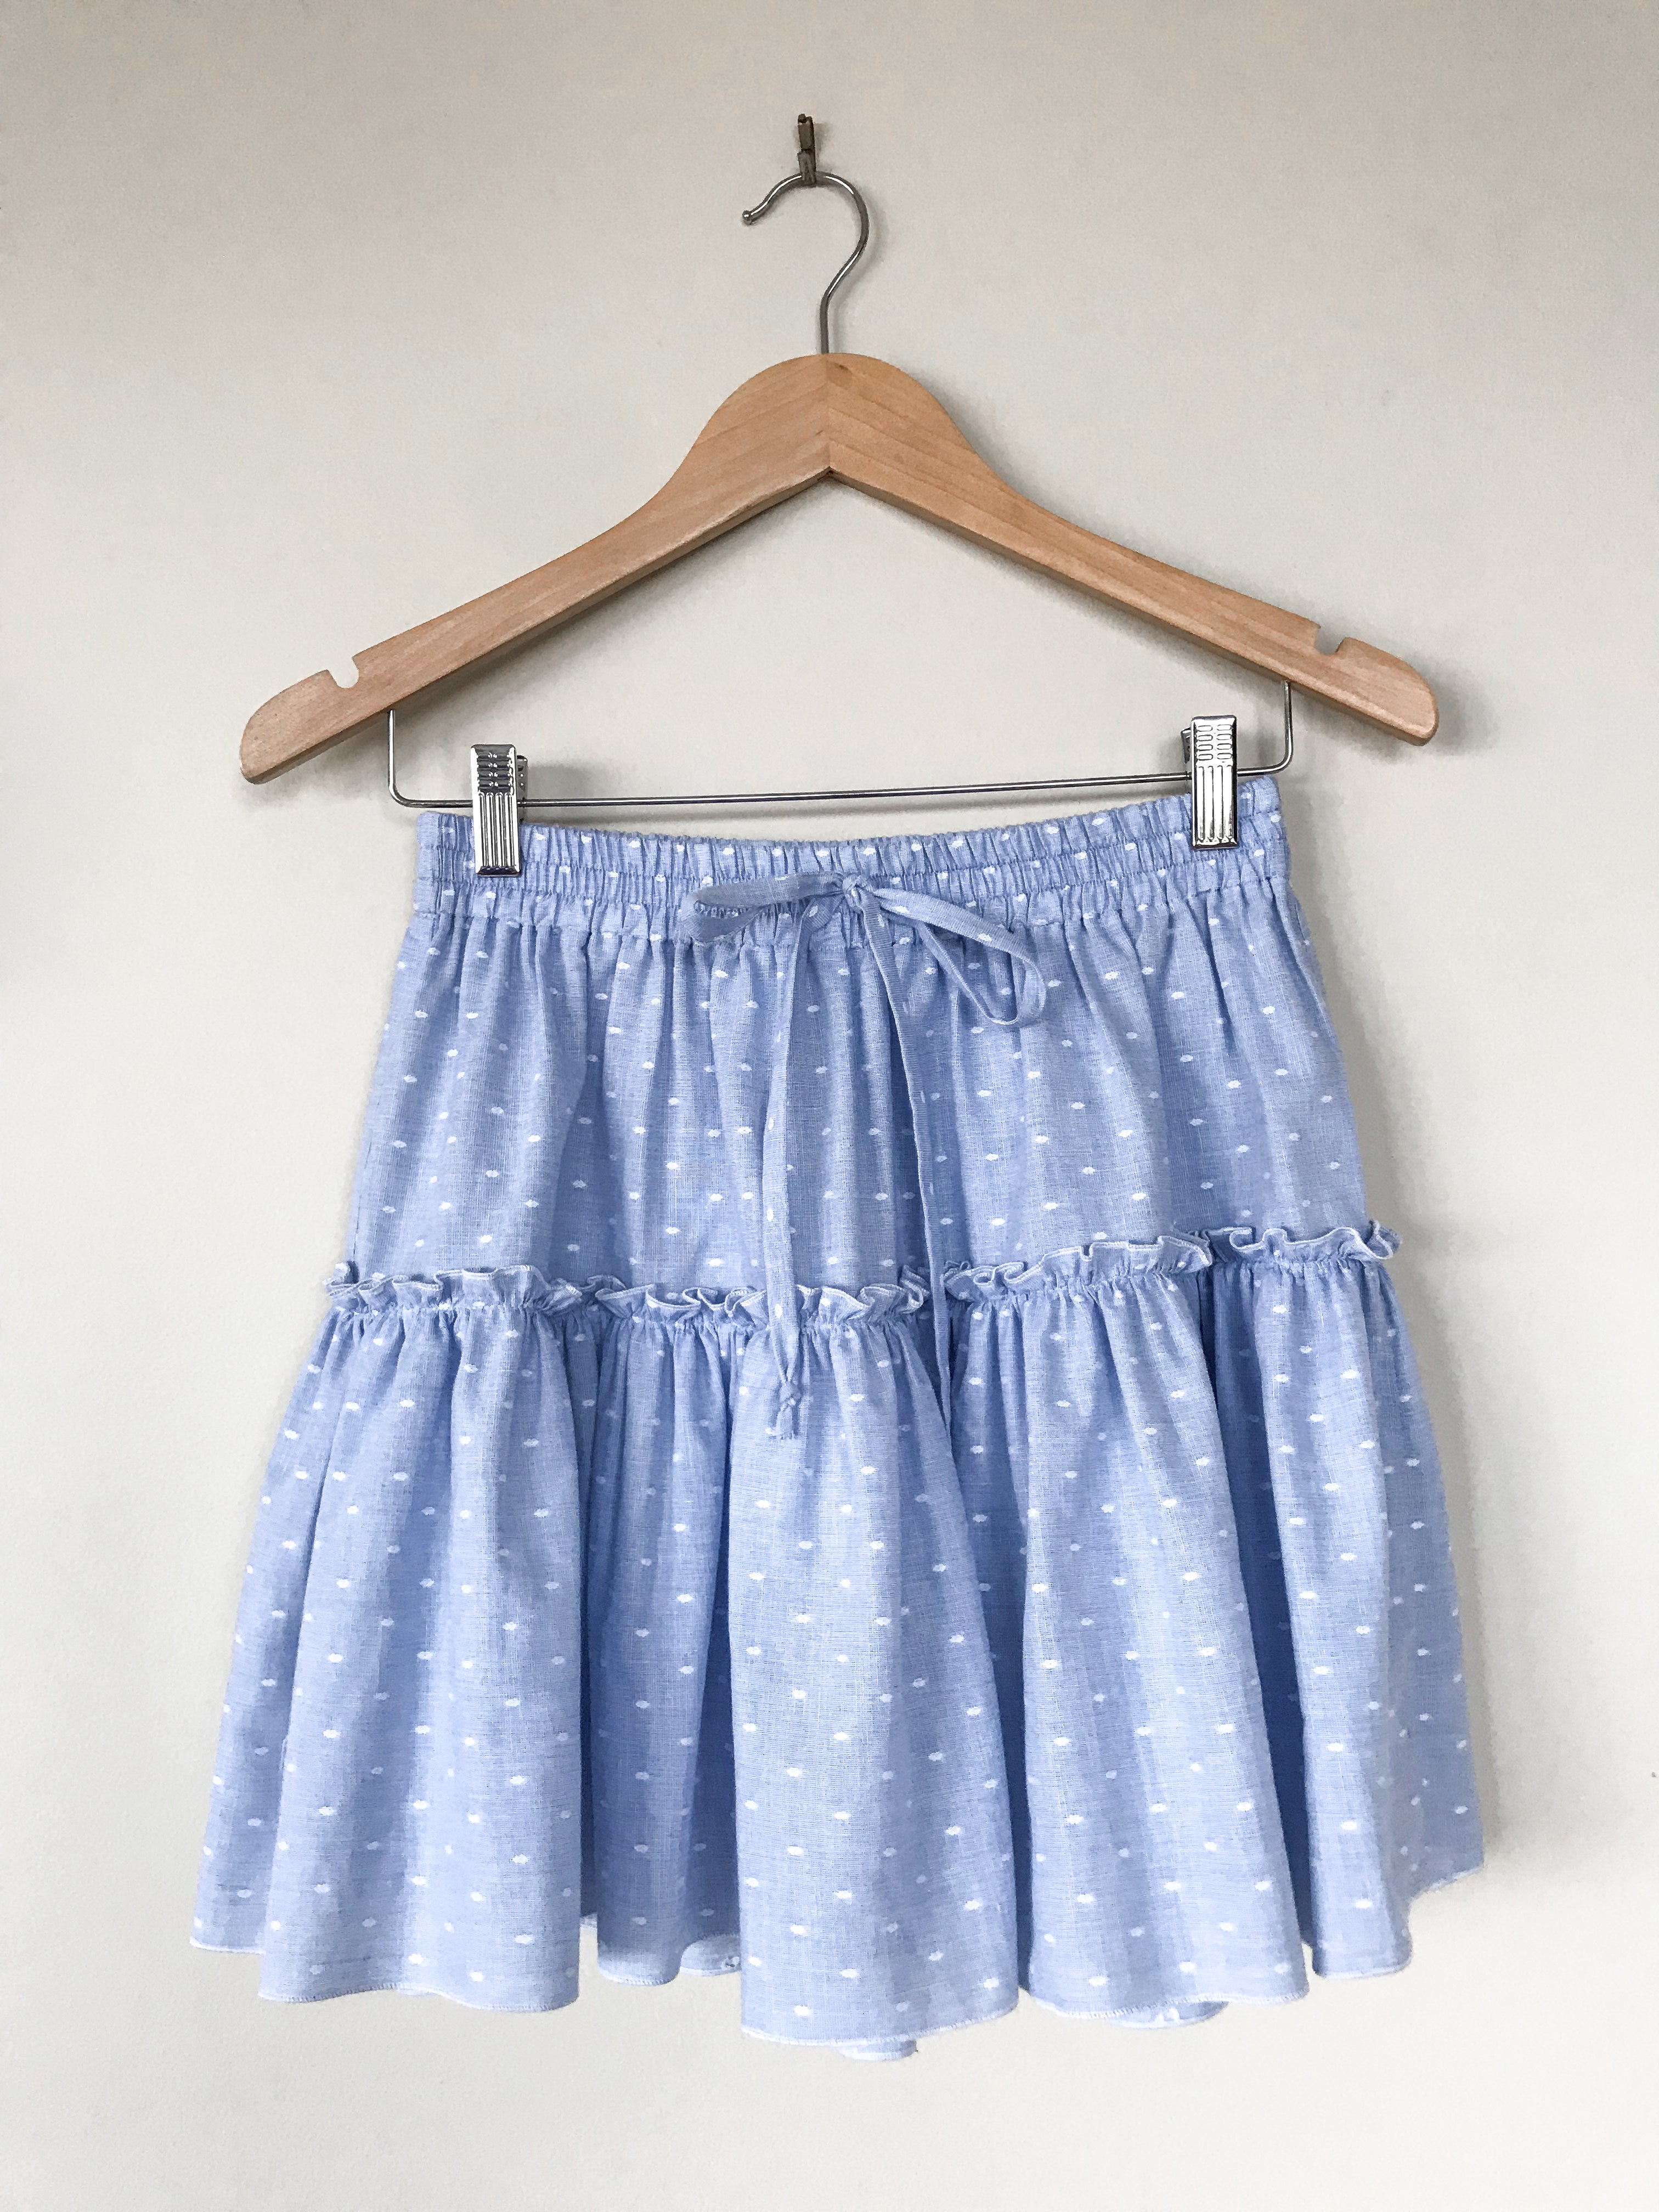 The Kami Skirt - DIY Sewing Tutorial | The Hemming